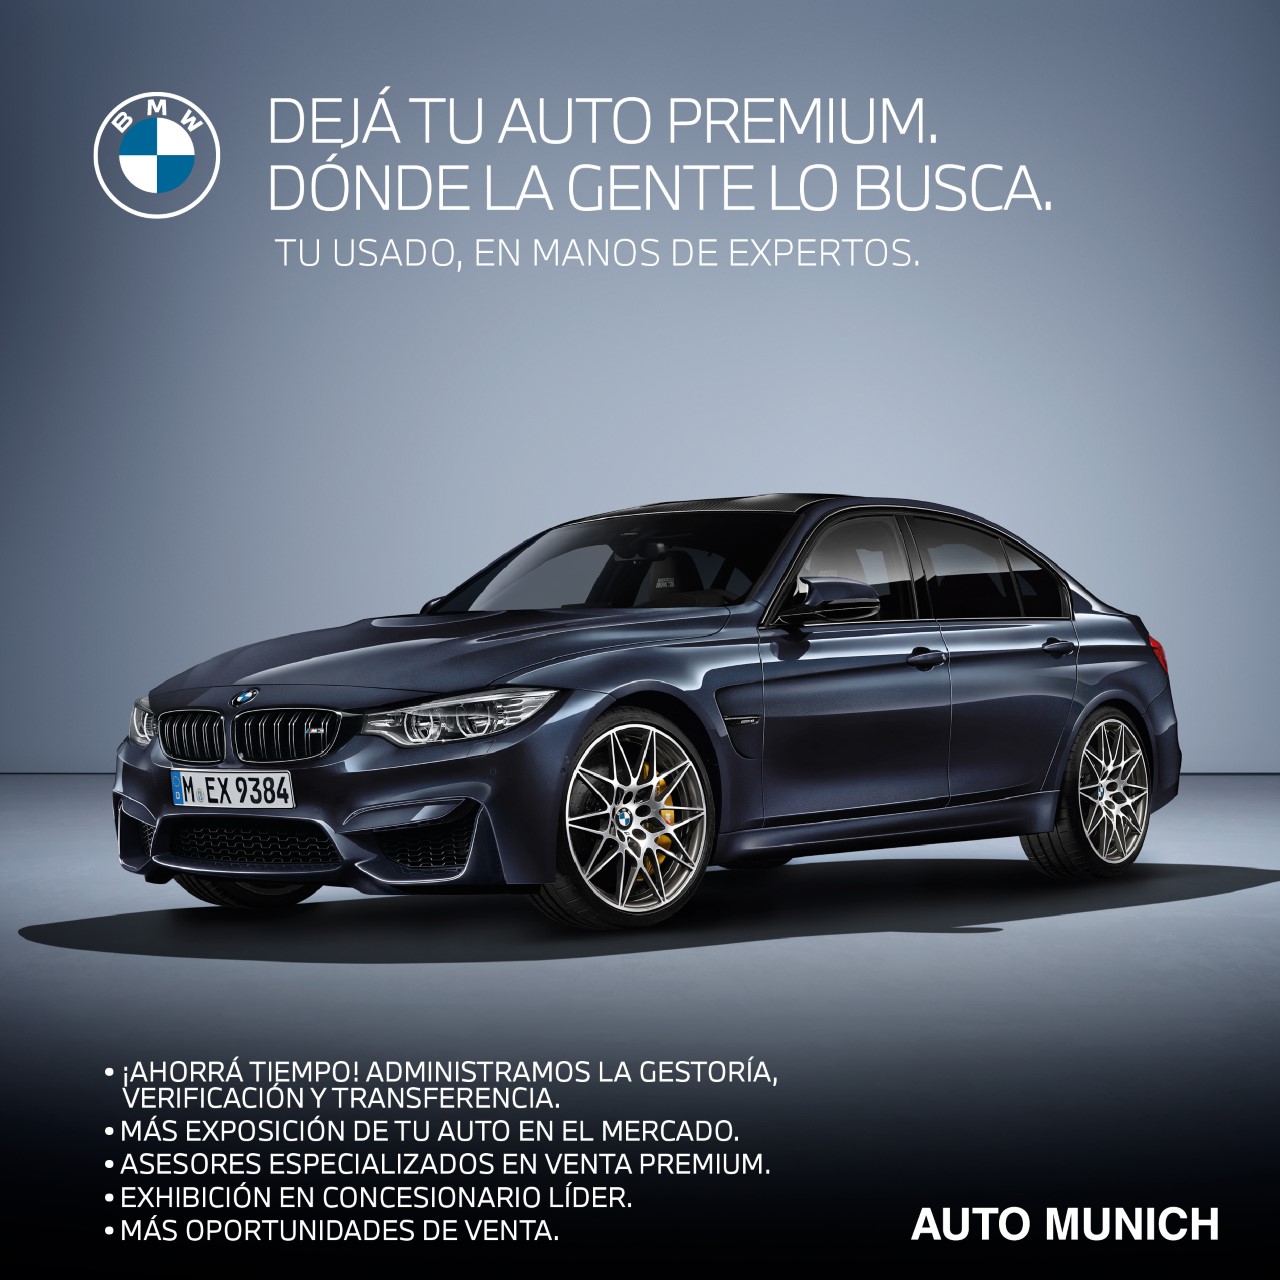 Auto Munich gestiona la venta de tu auto premium. | Canal Showsport